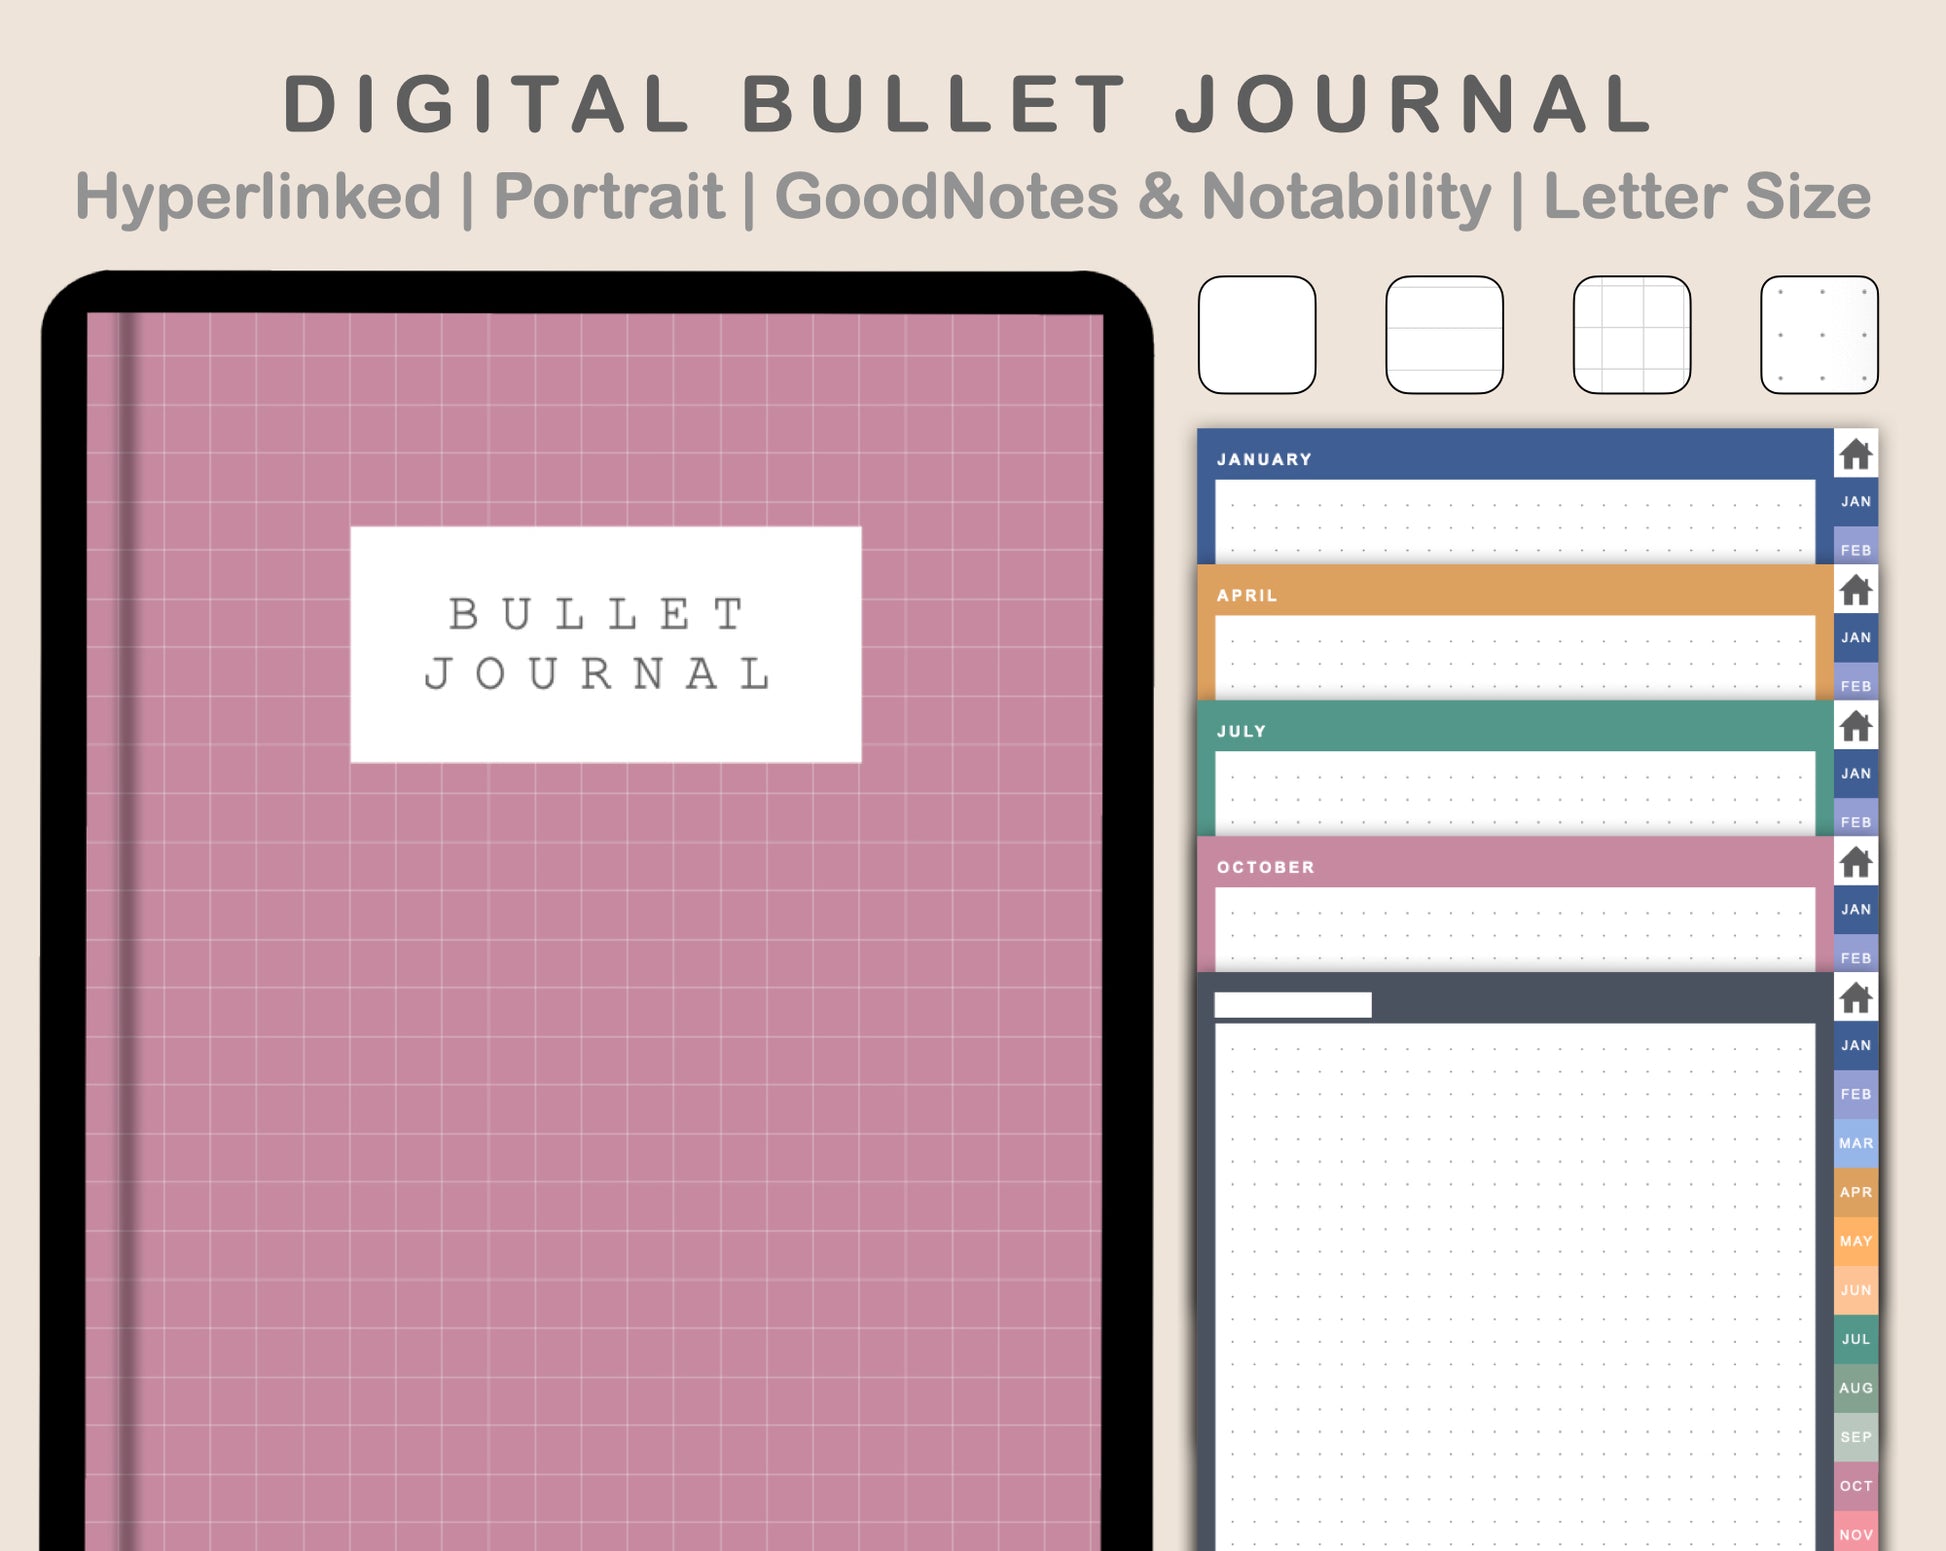 Digital Bullet Journal Templates for Free